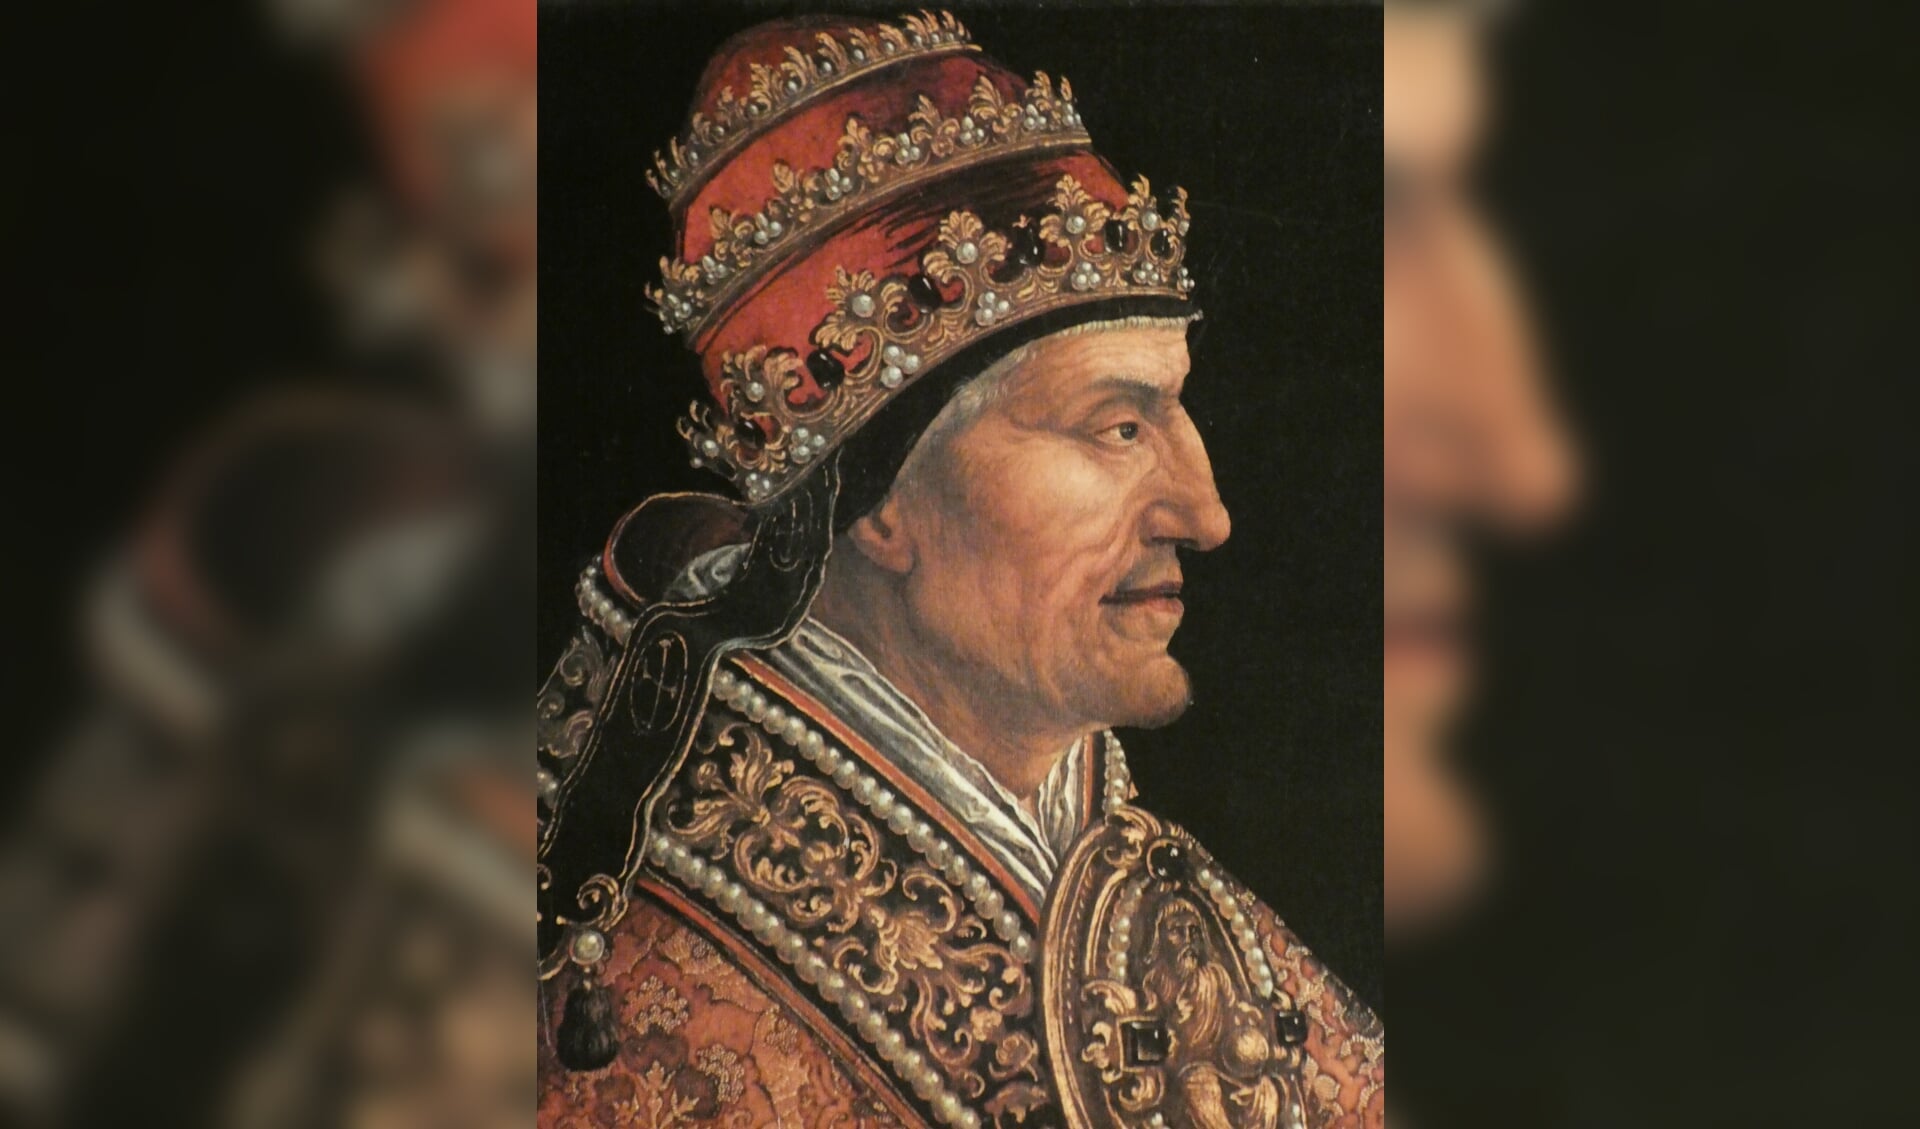 Lezing over de eerste Nederlandse paus Adrianus VI